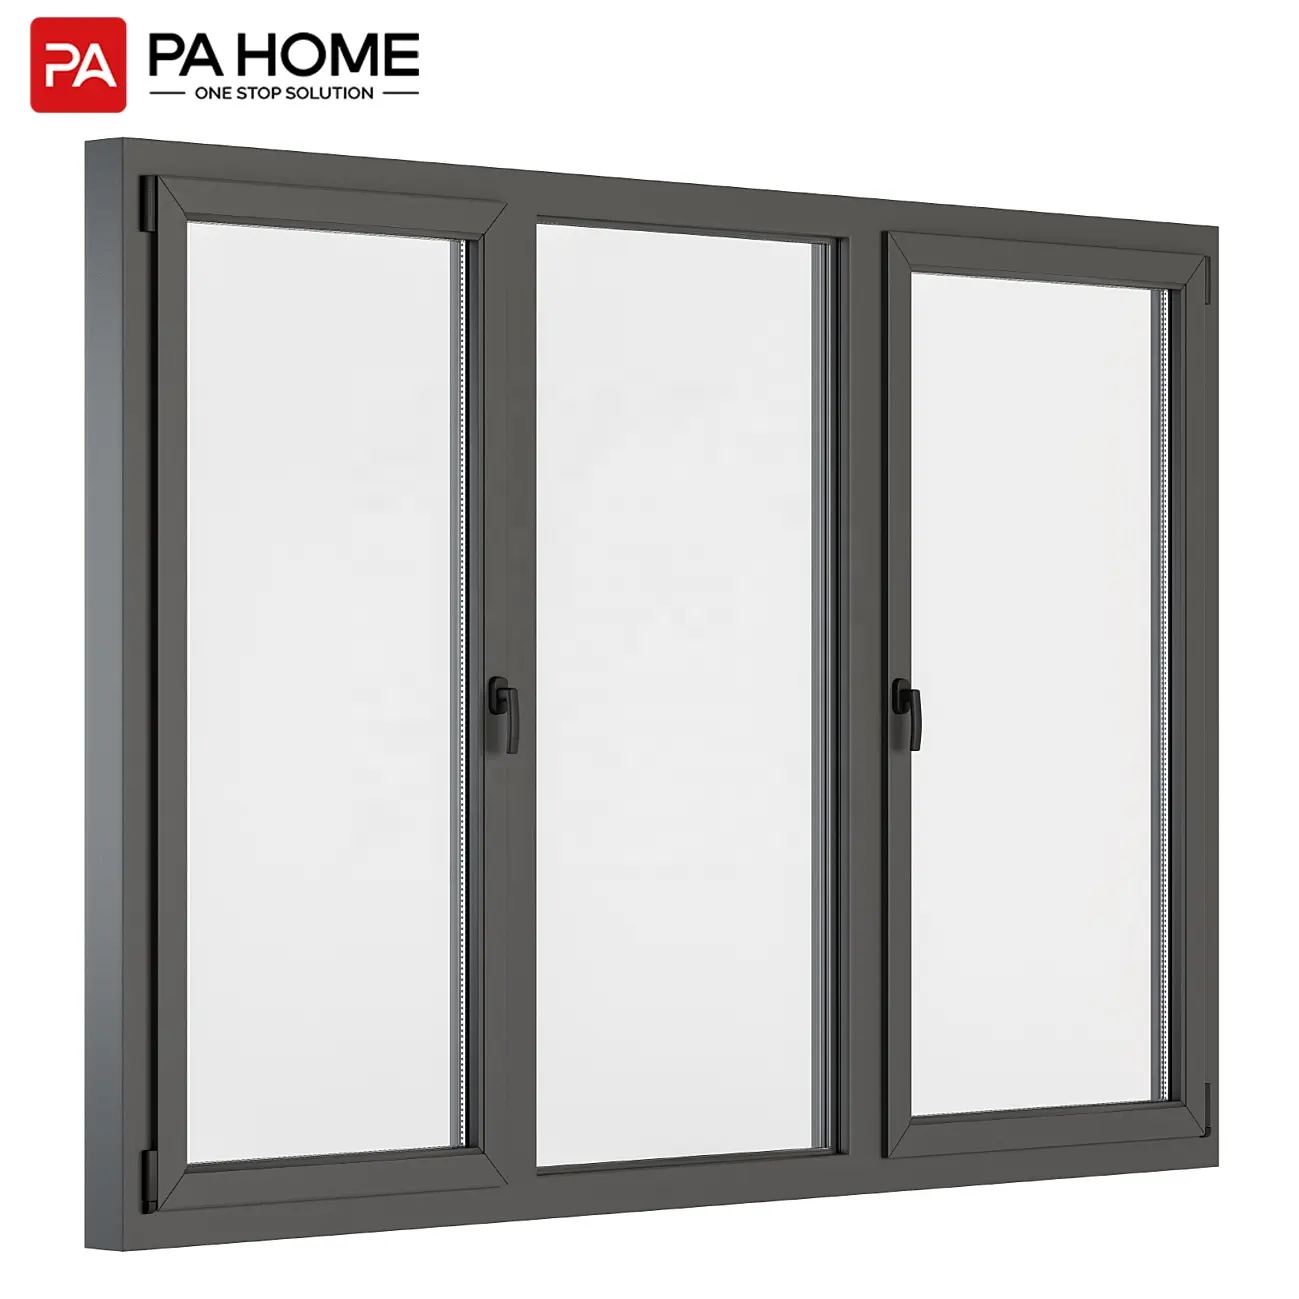 PA smart house designs aluminum custom double glazed casement windows